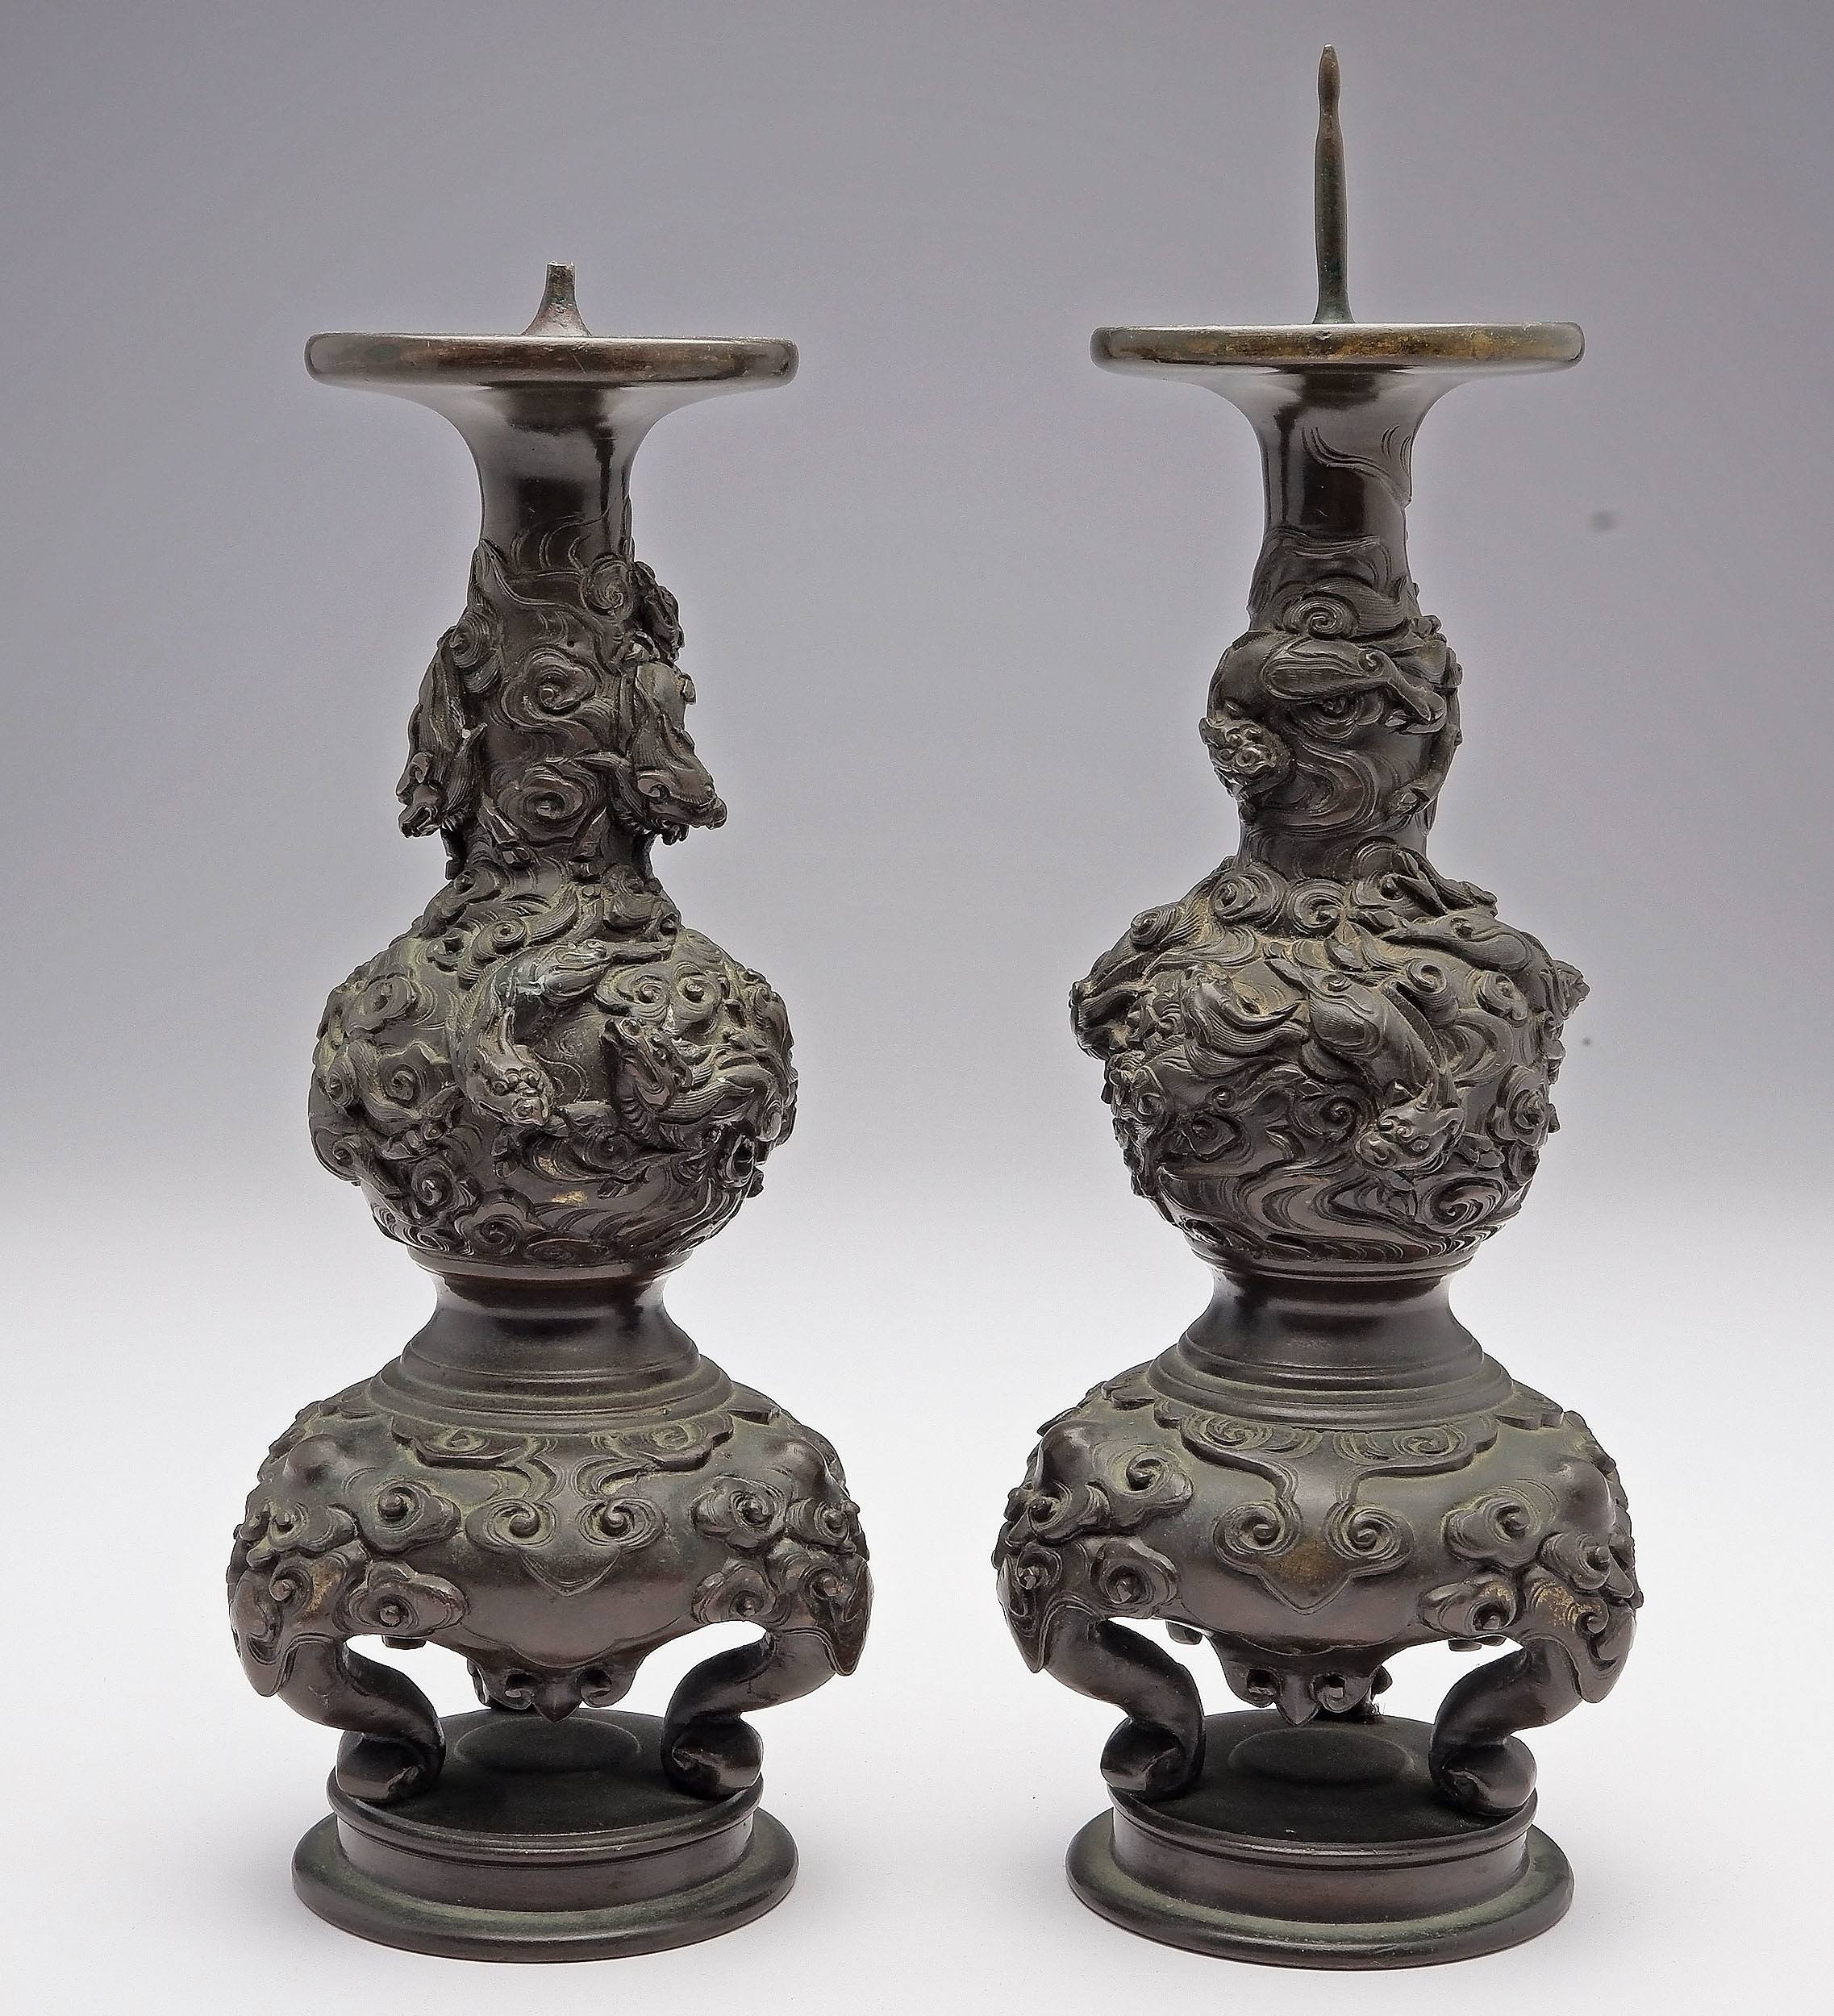 'Pair of Japanese Cast Bronze Dragon Candlesticks Meiji Period 1868-1912'